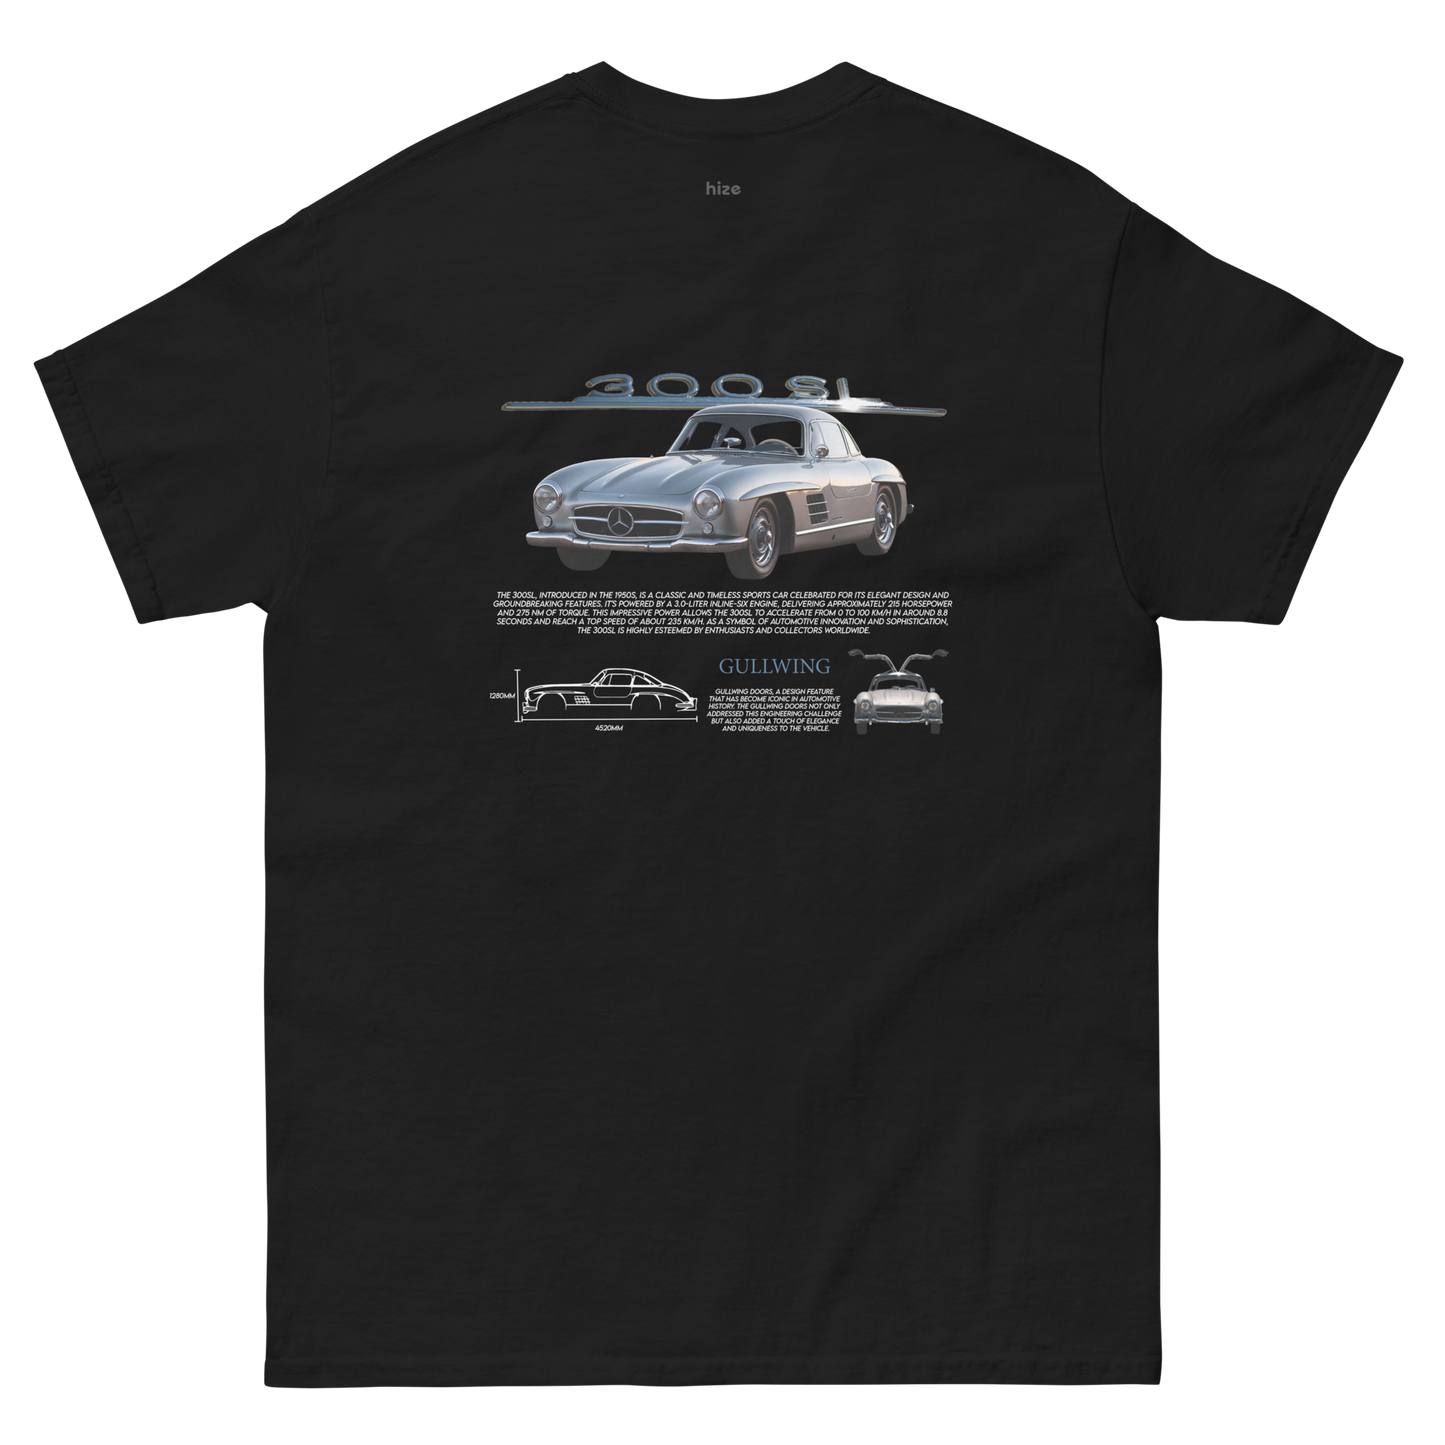 Mercedes-Benz 300 sl T-shirt - Black Back View